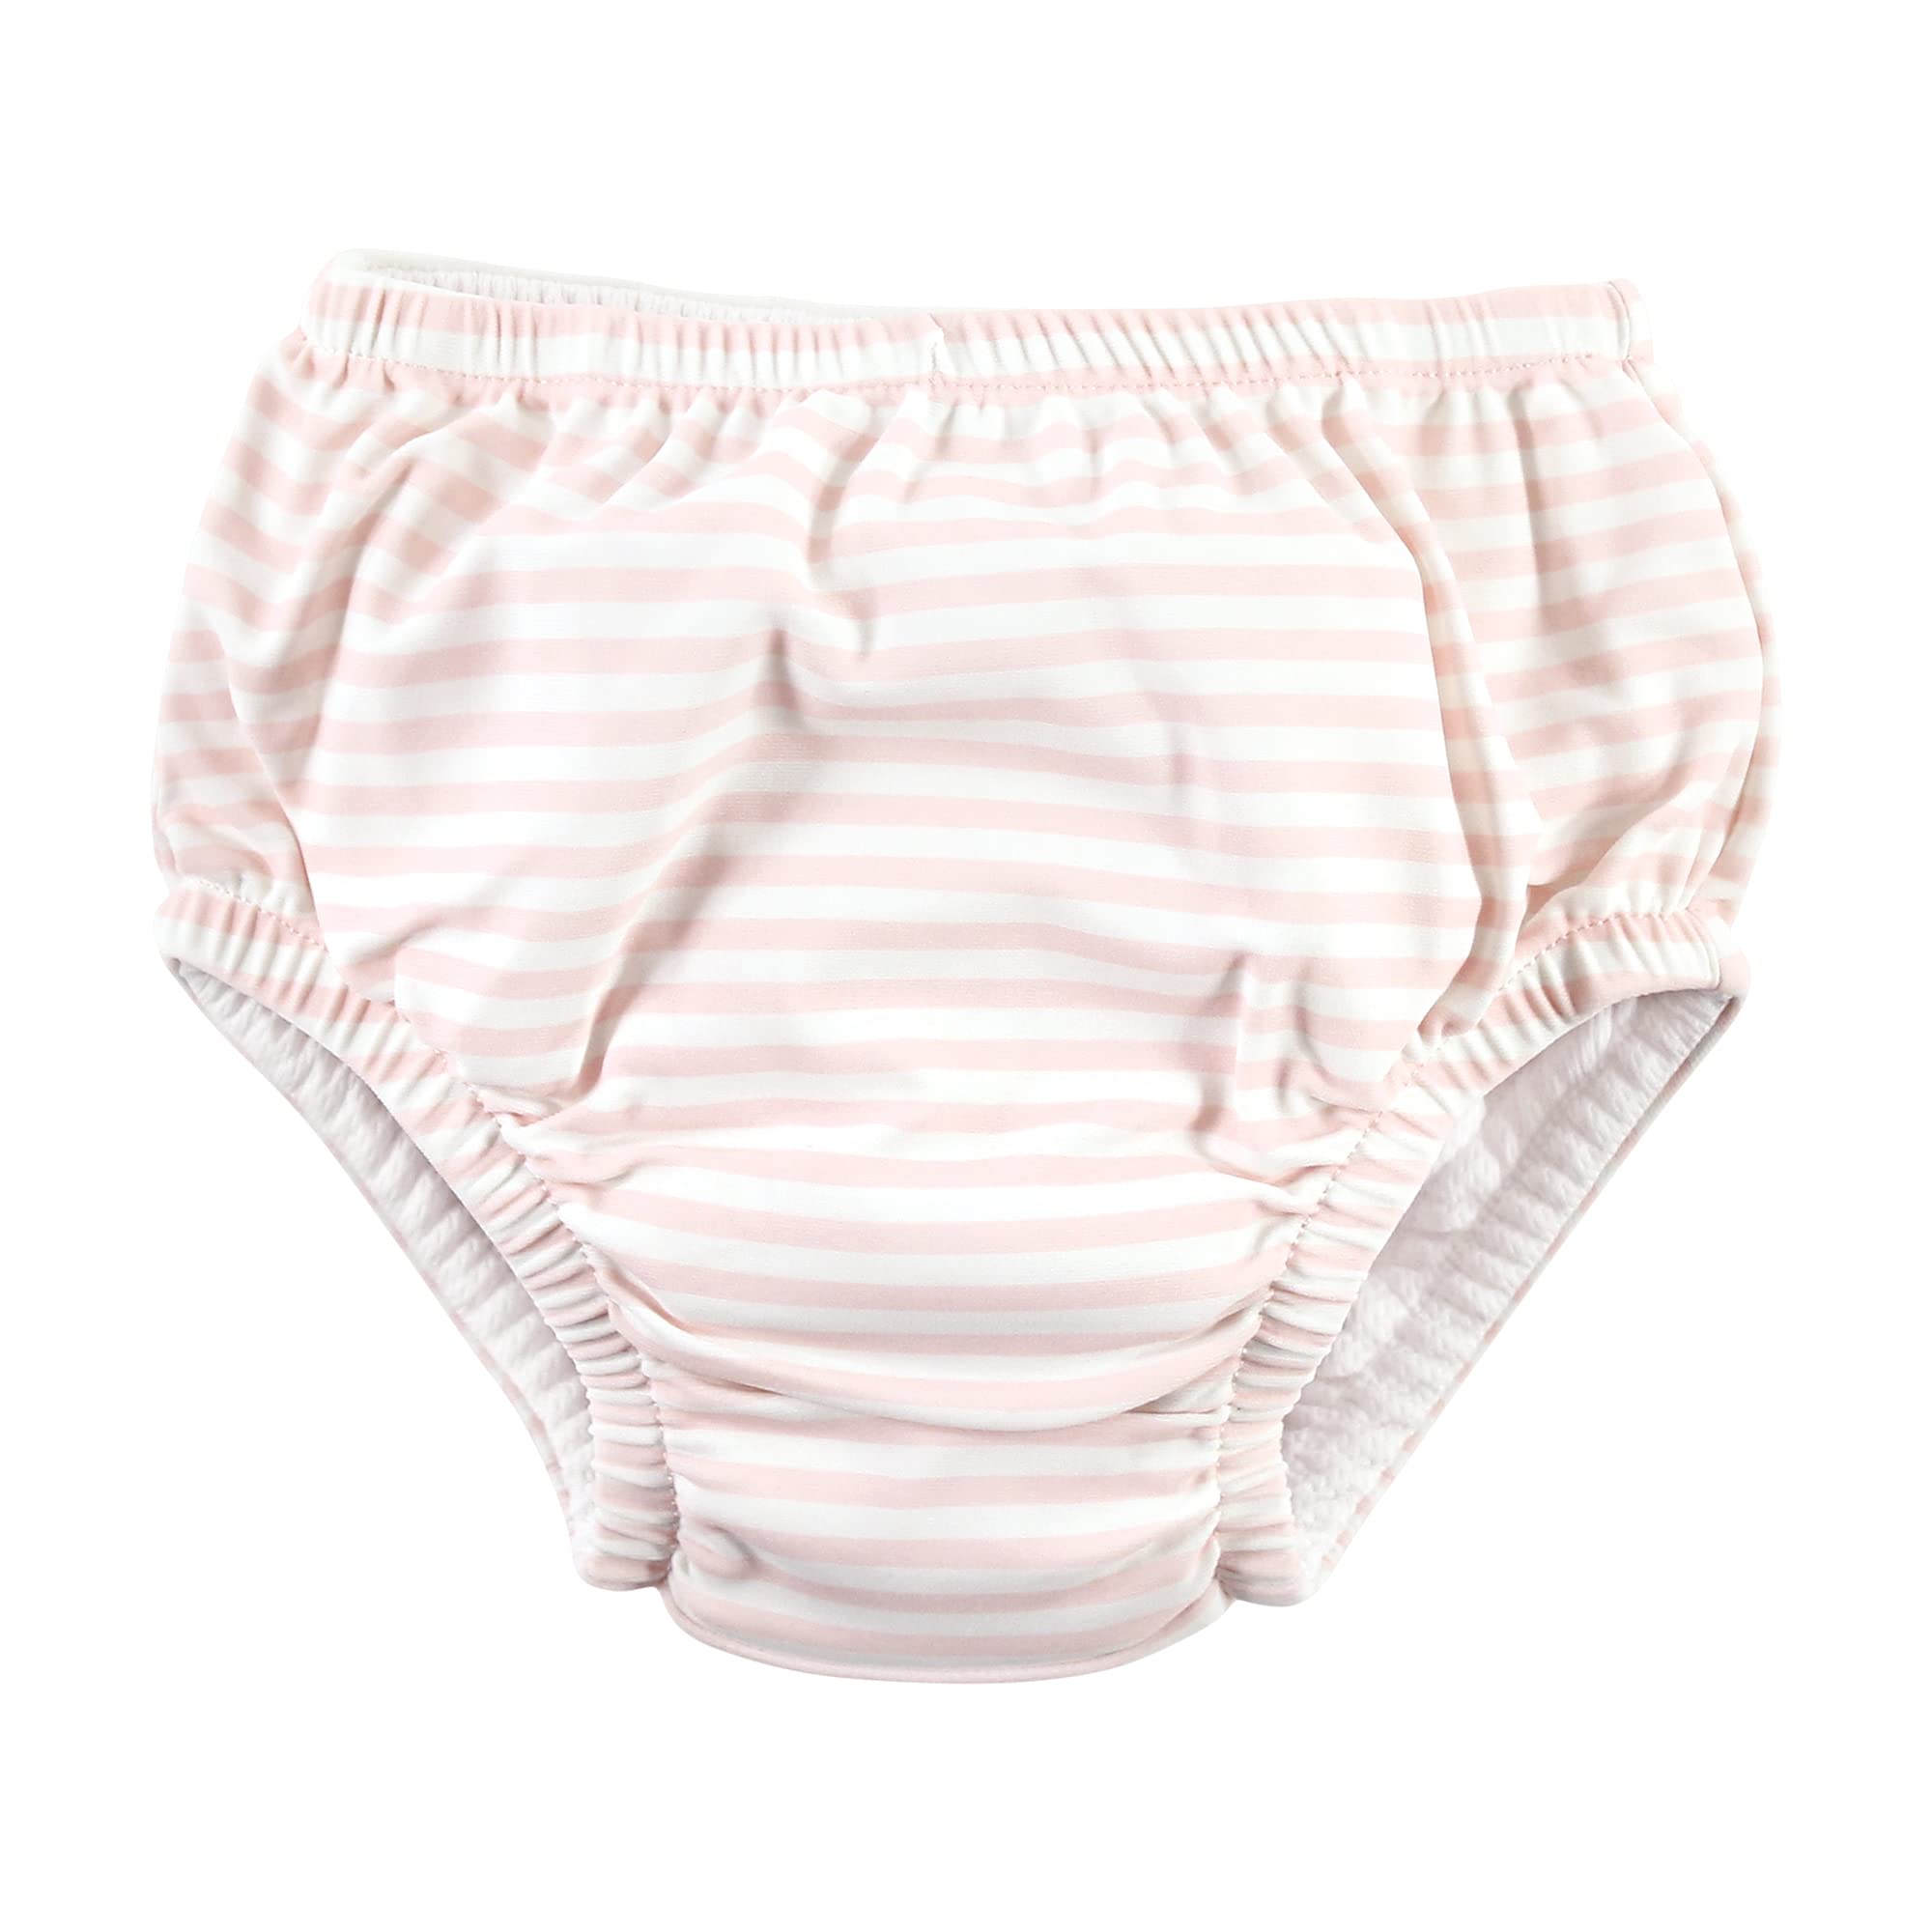 Hudson Baby Unisex Baby Swim Diapers, Oranges, 12-18 Months